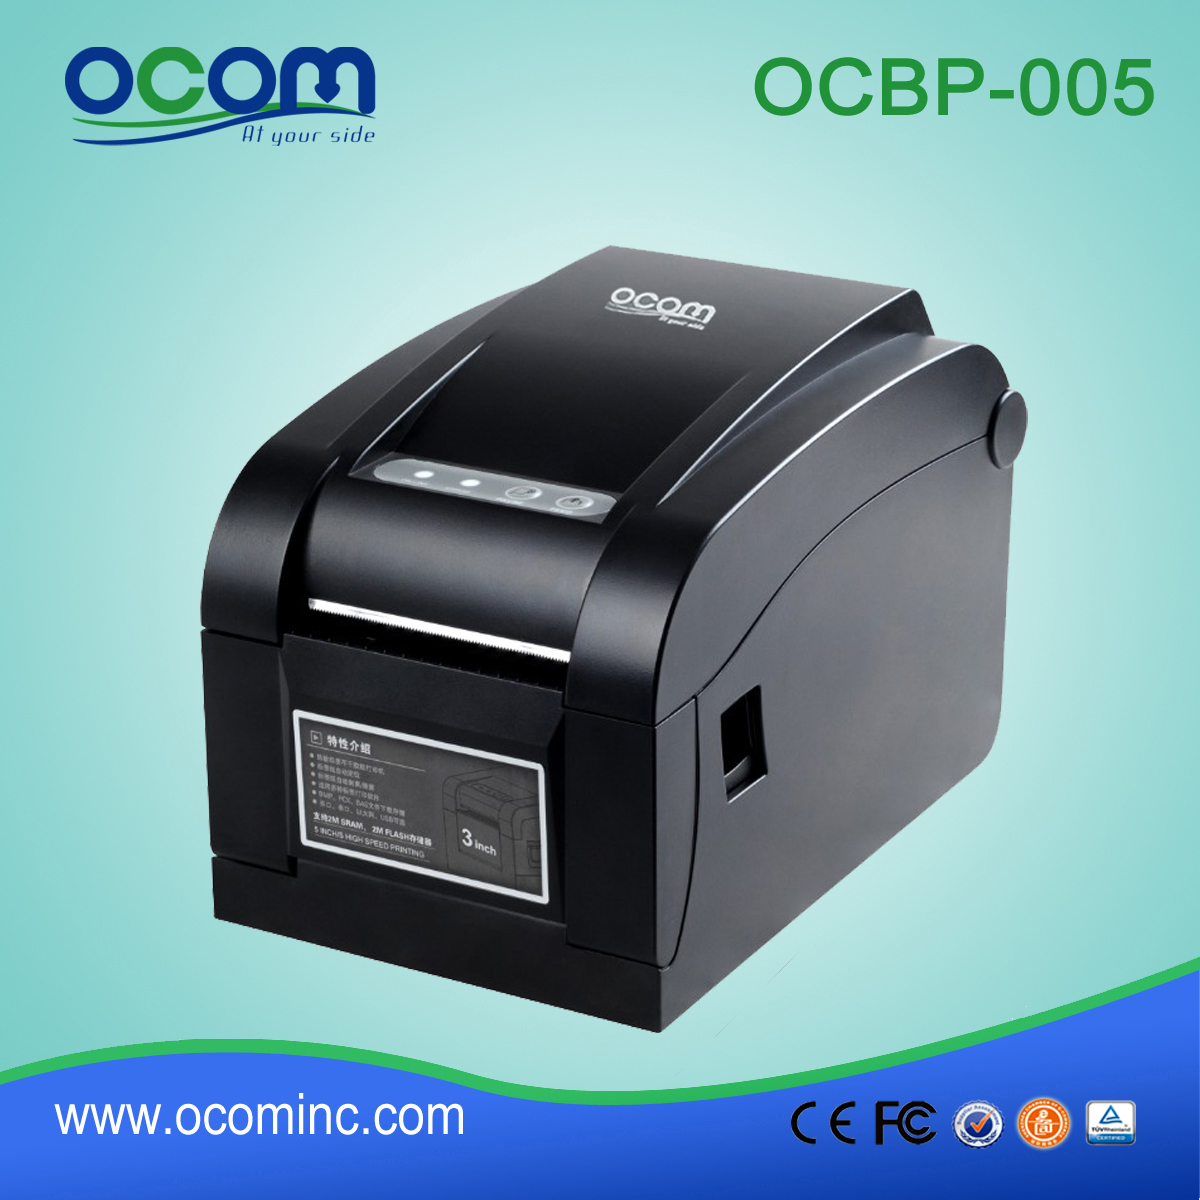 OCBP-005-URL 16 χιλιοστά-82 χιλιοστά χαρτί θερμικό εκτυπωτή ετικετών γραμμωτού κώδικα